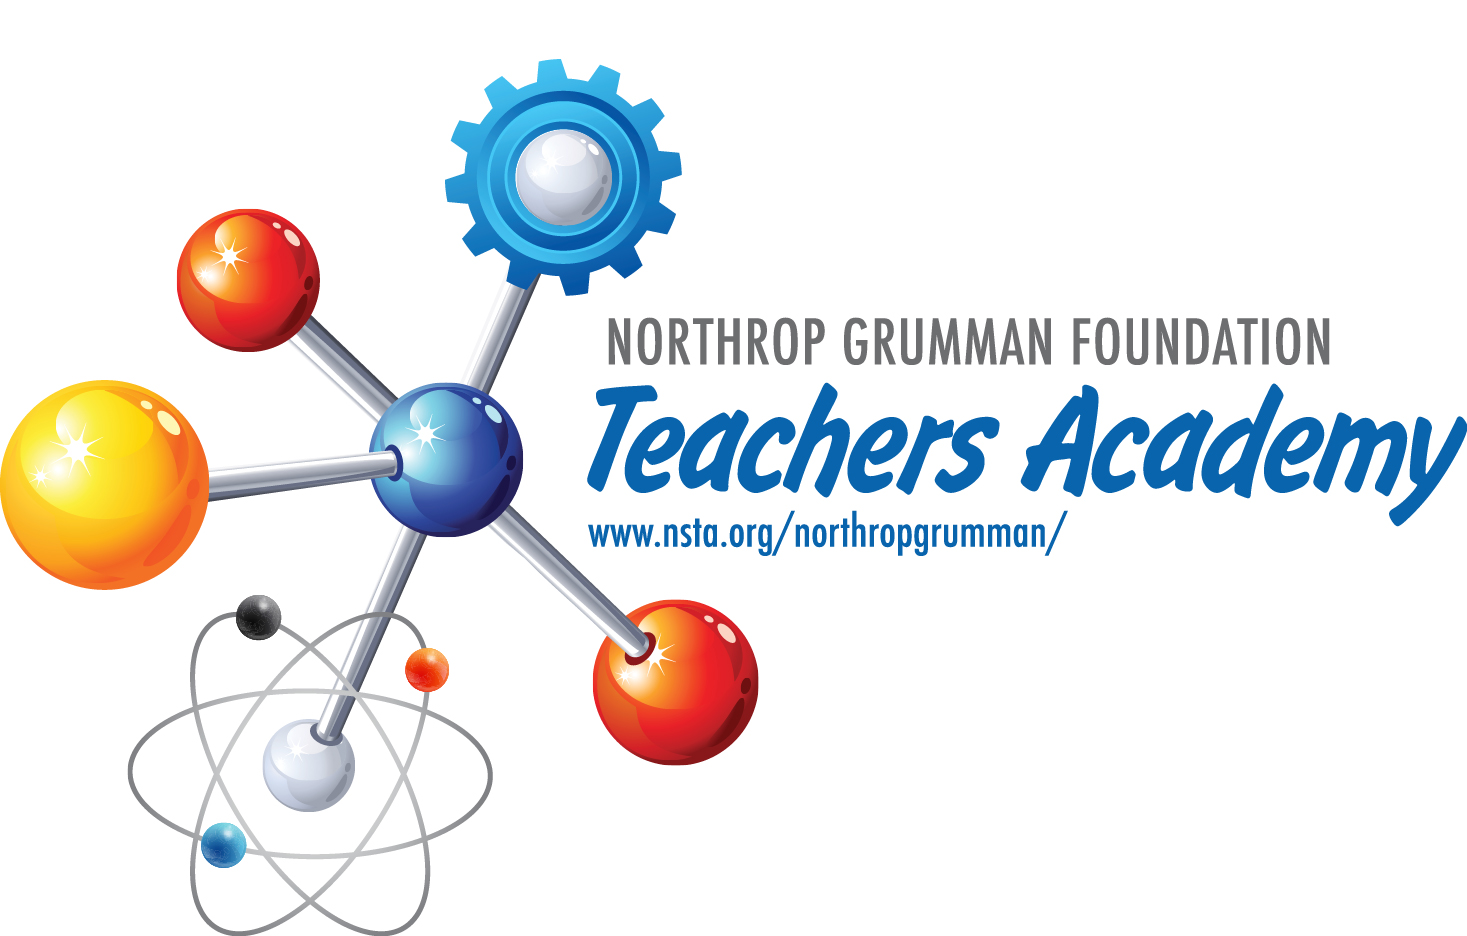 Northrop Grumman Foundation Teachers Academy - Logo - https://s41078.pcdn.co/wp-content/uploads/2018/11/Corporate-Community-or-Nonprofit-Partnership.jpg